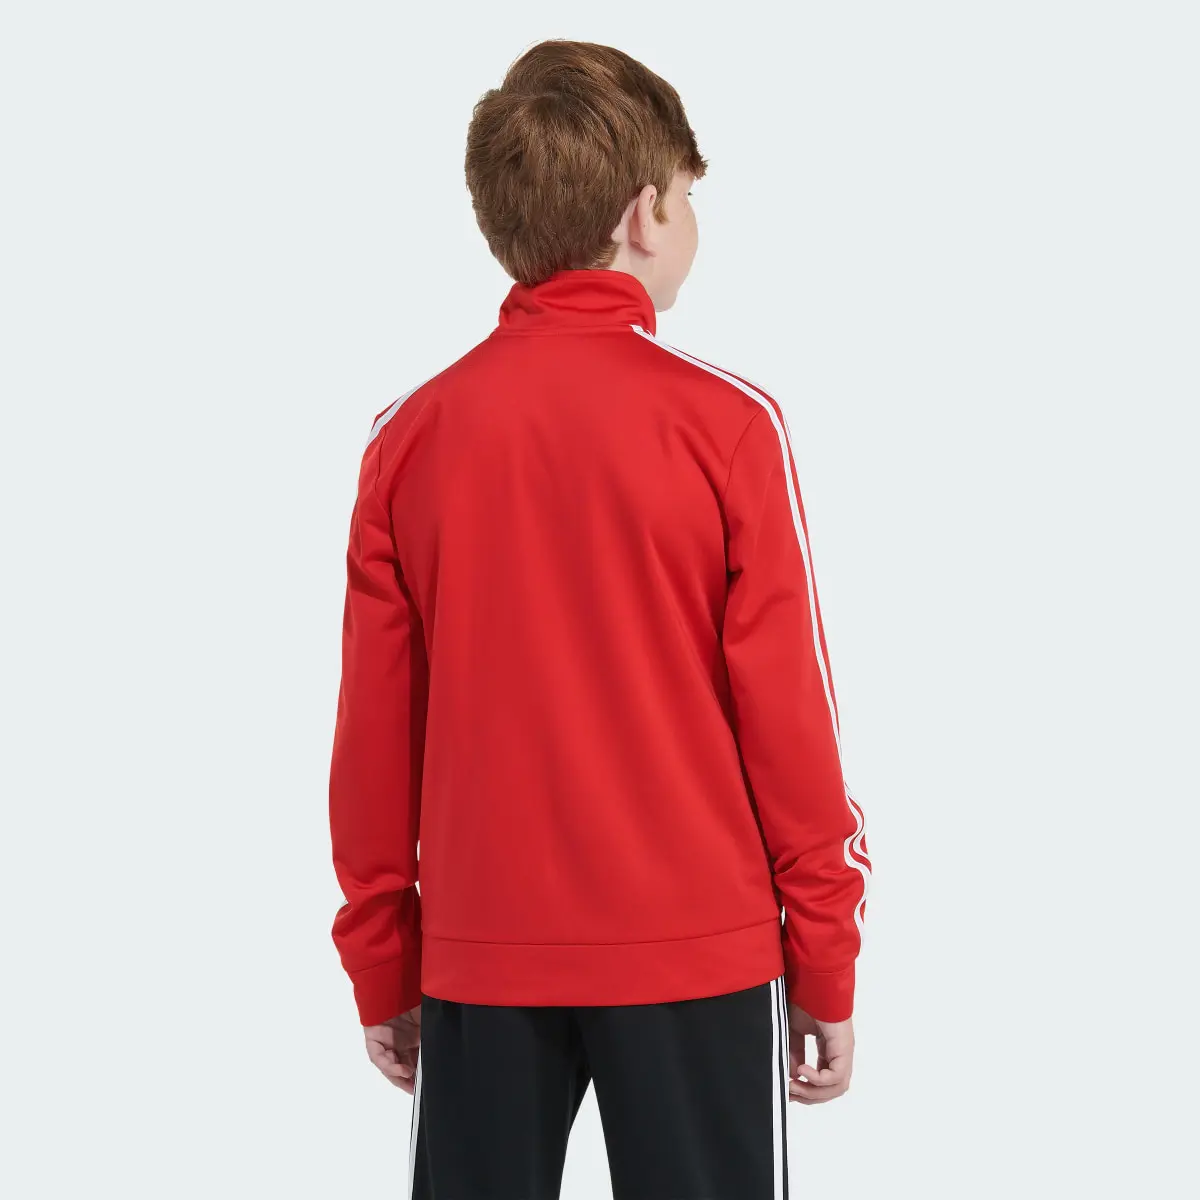 Adidas Colorblock Tricot Jacket. 2